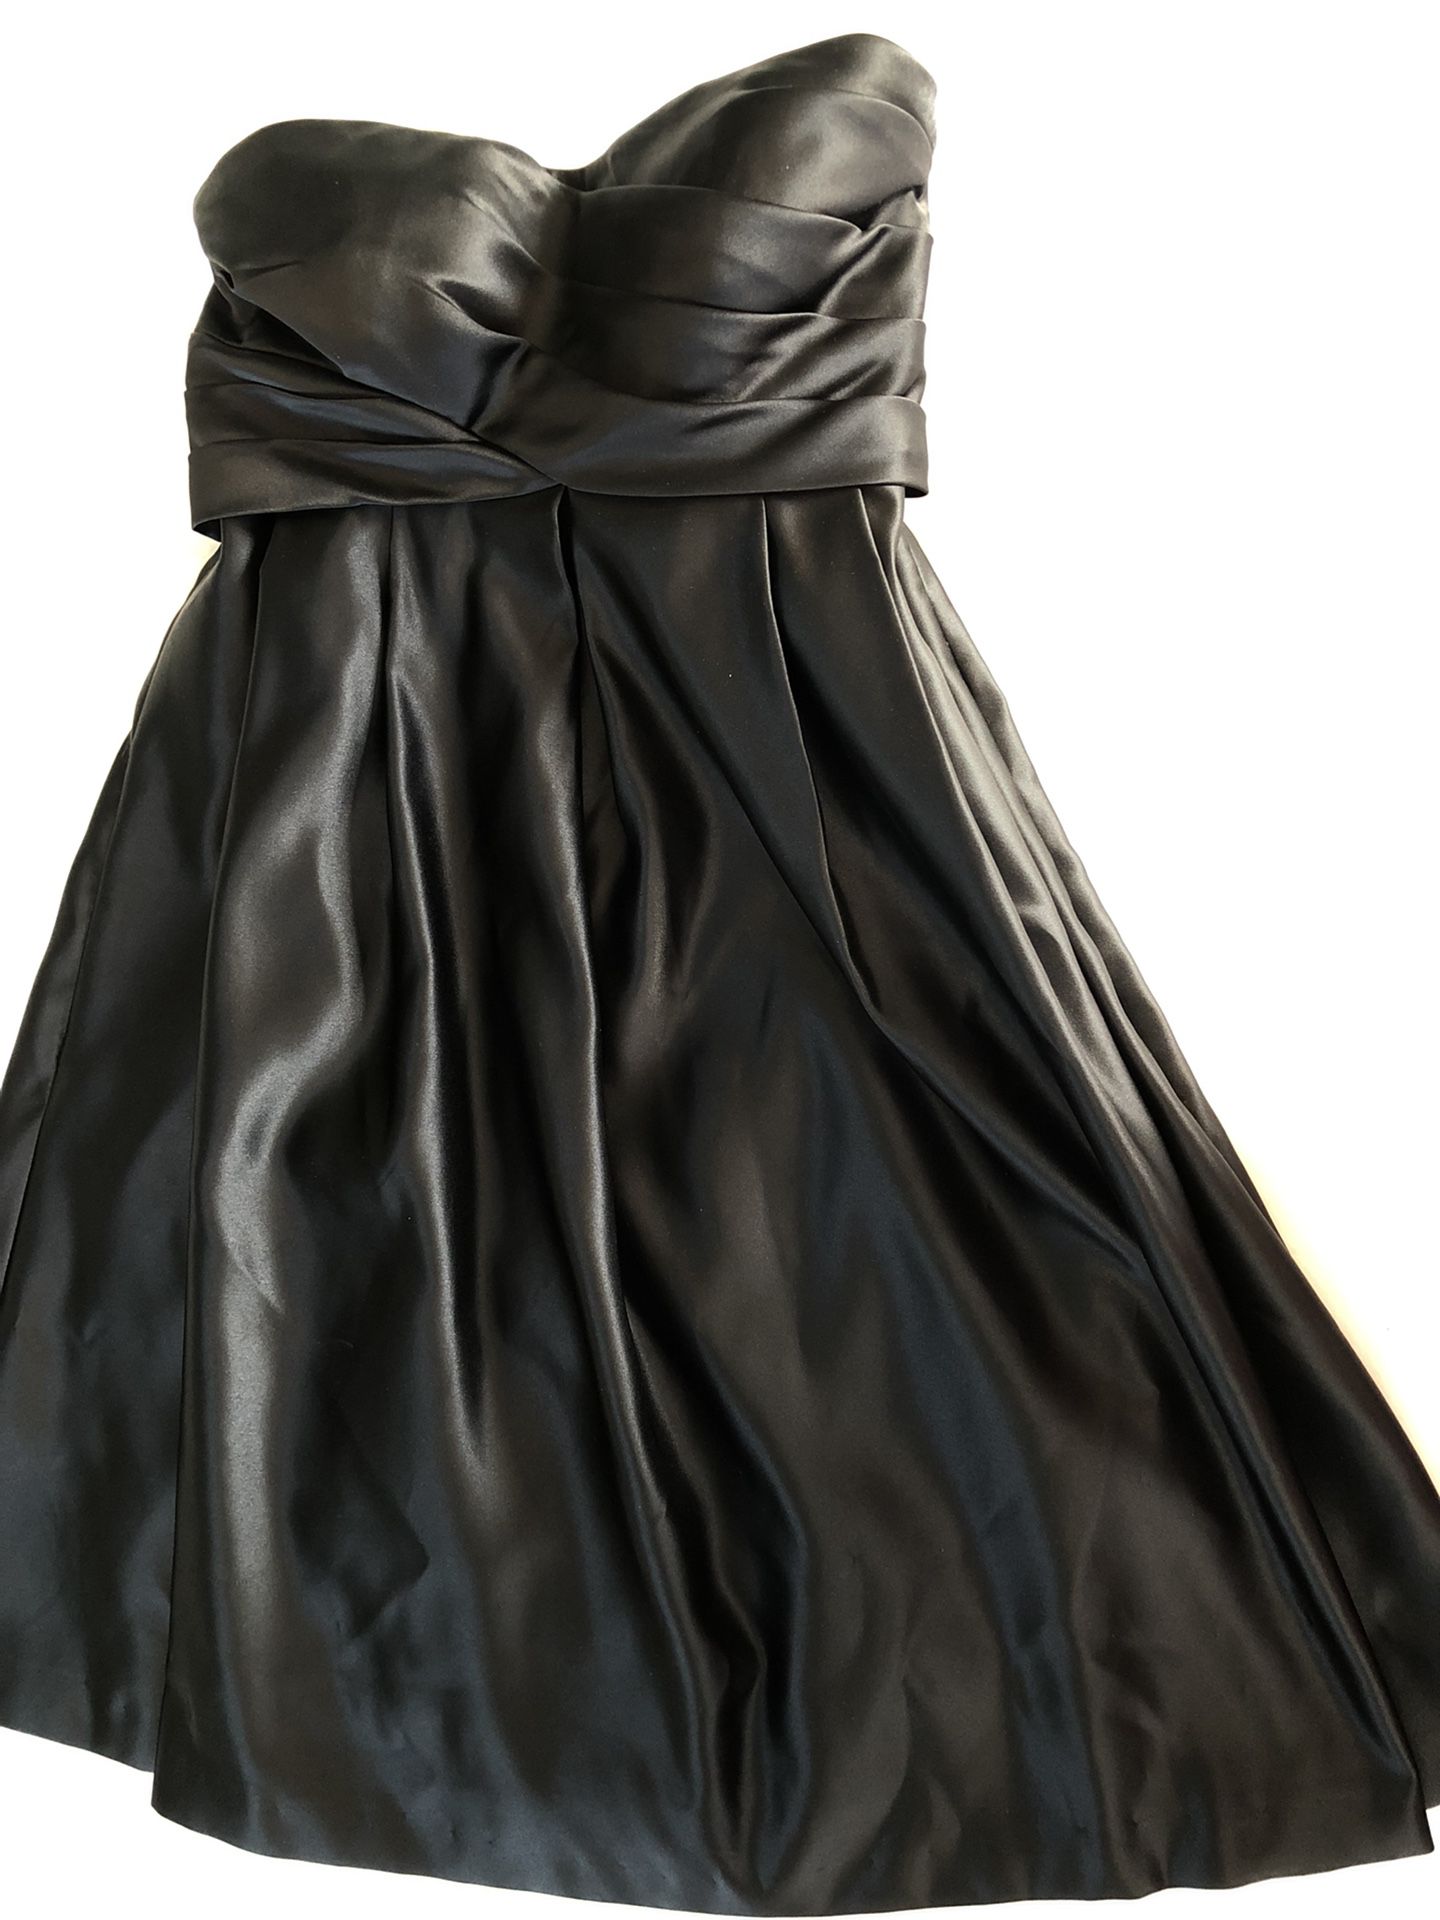 Black Strapless Bridesmaid Dress